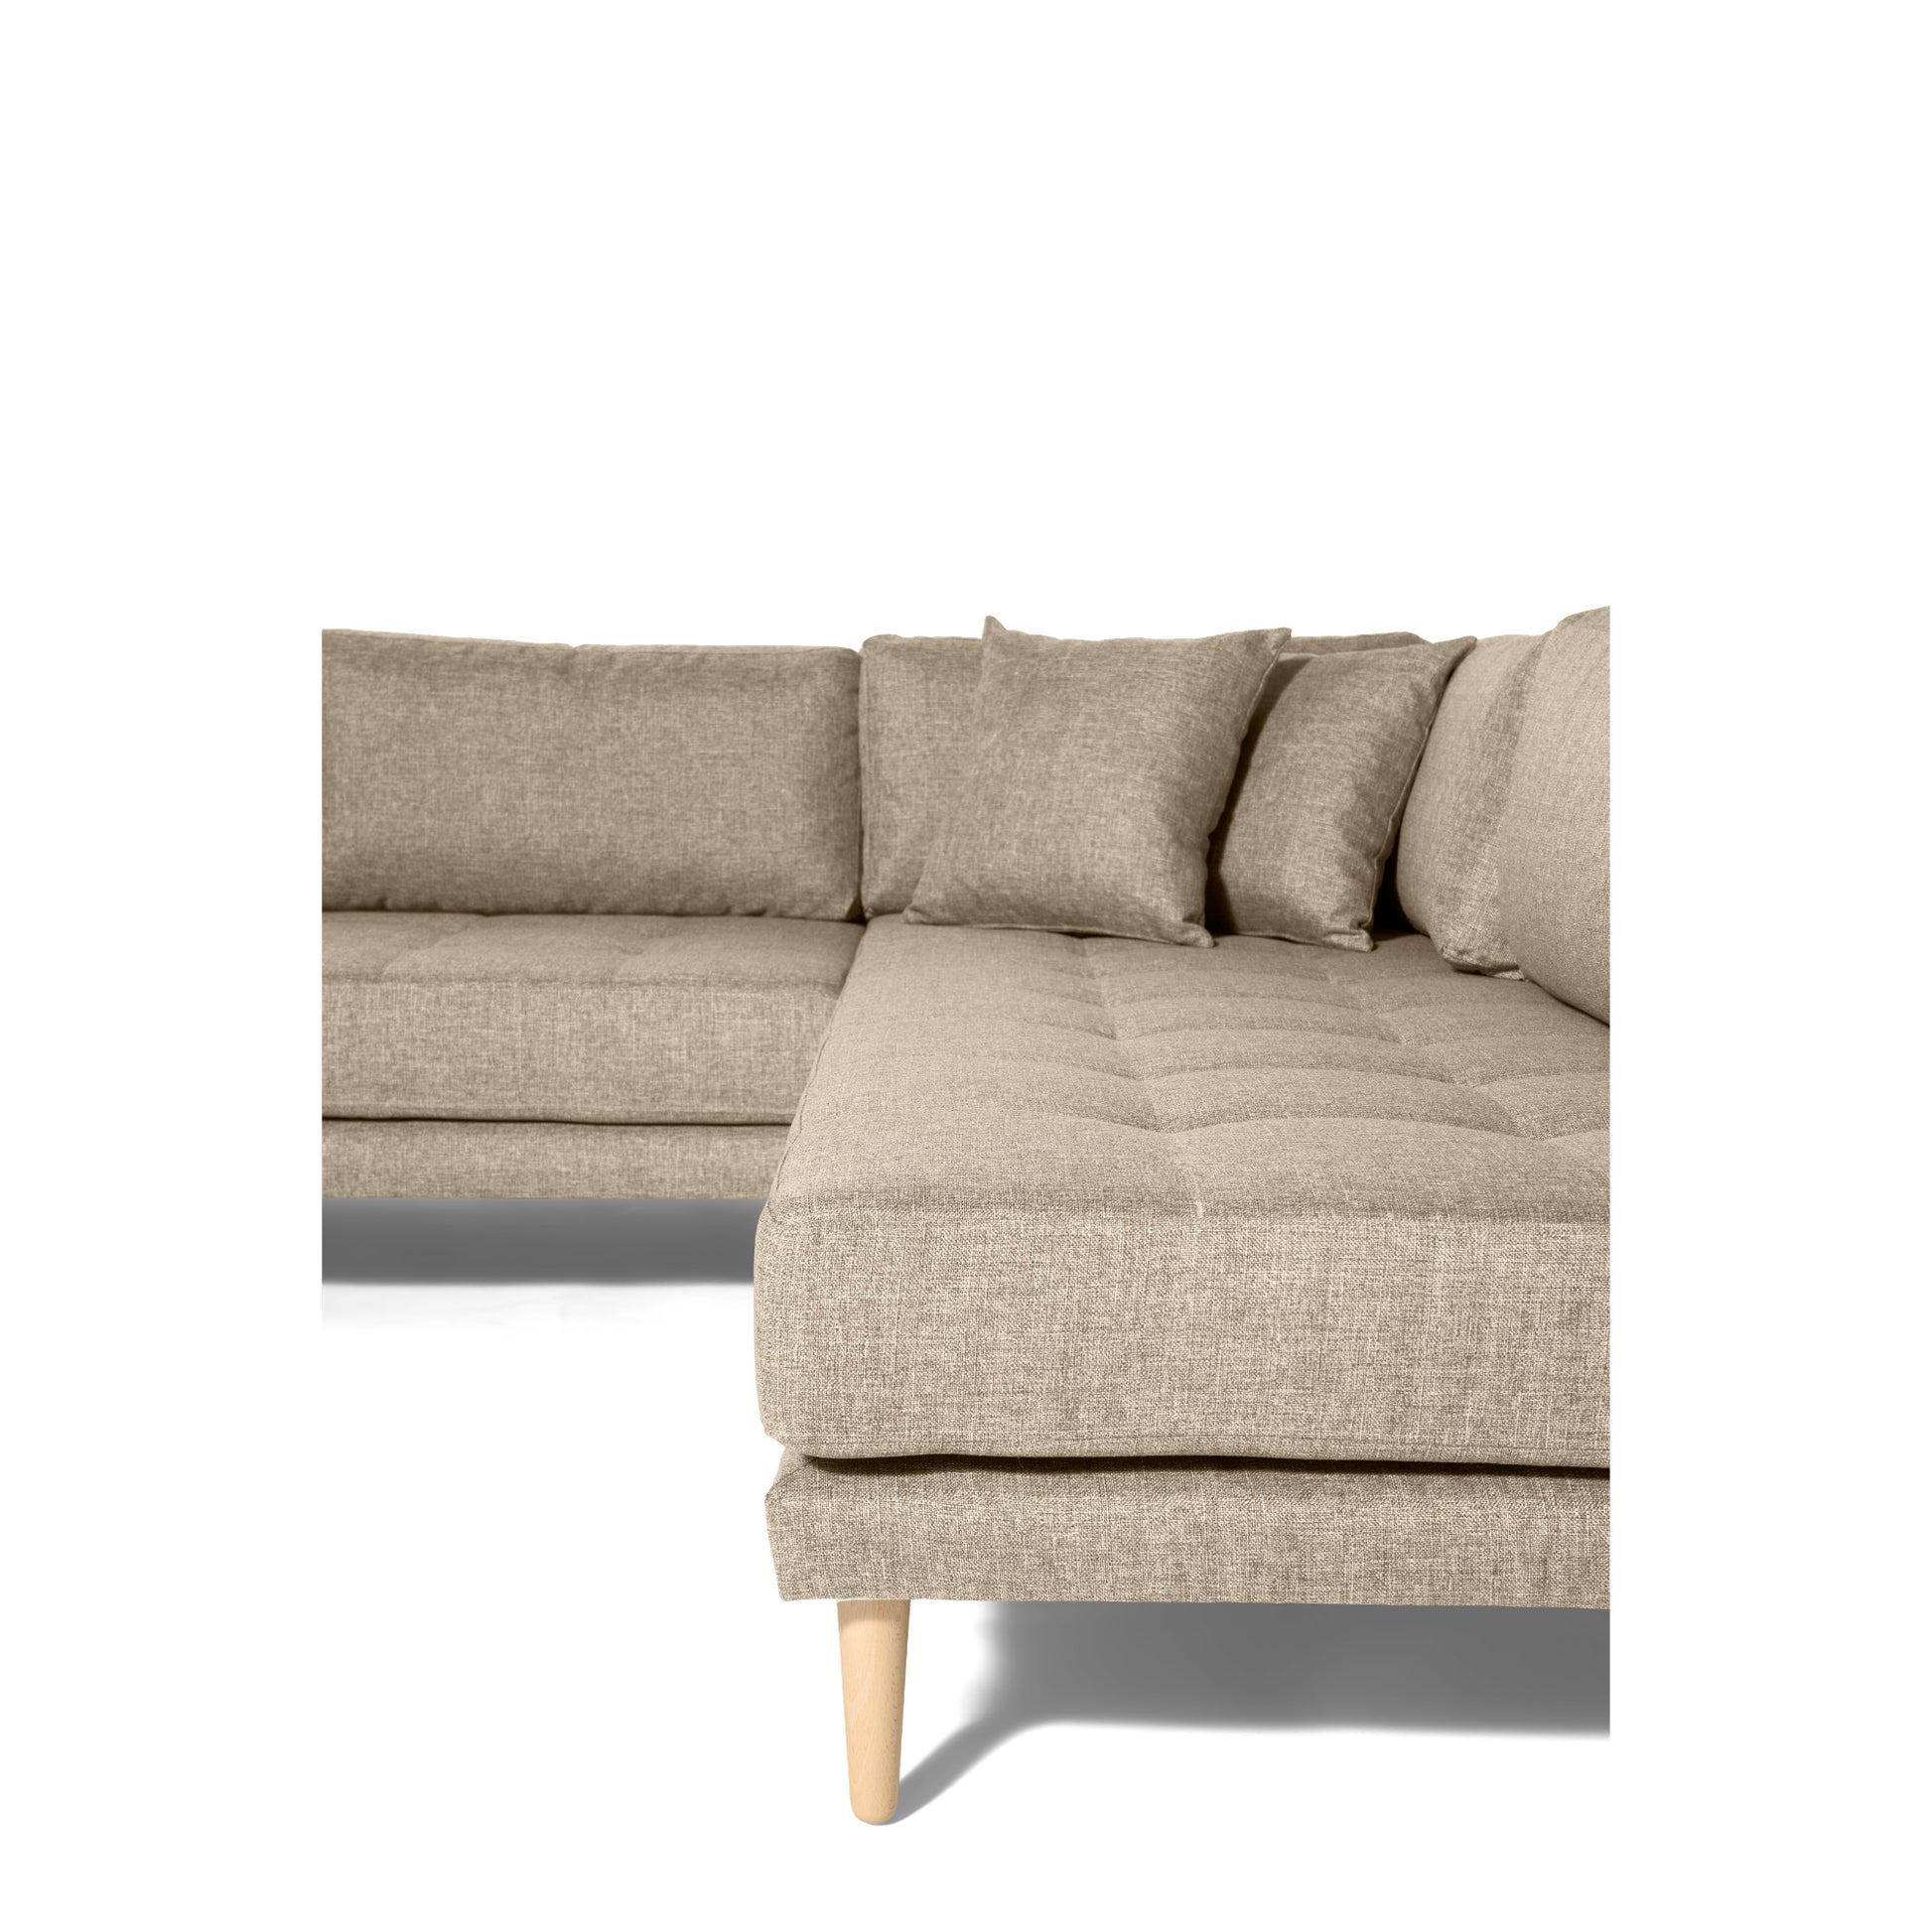 Cali venstrevendt U-sofa - Møbelkompagniet